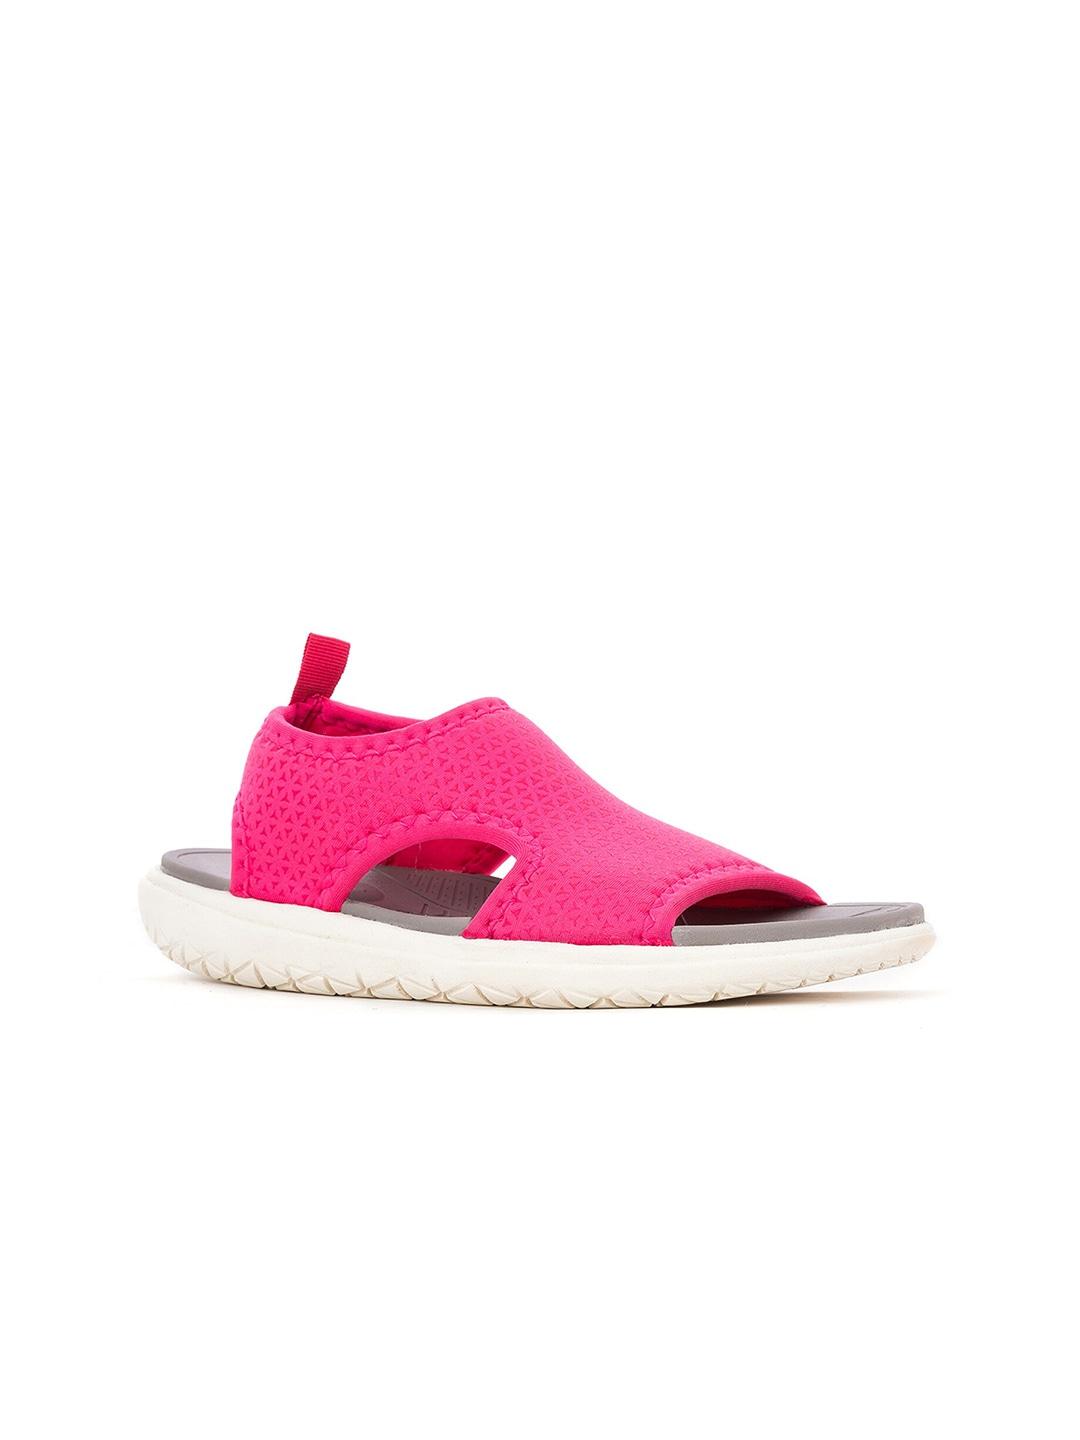 khadims women pink & white comfort sandals